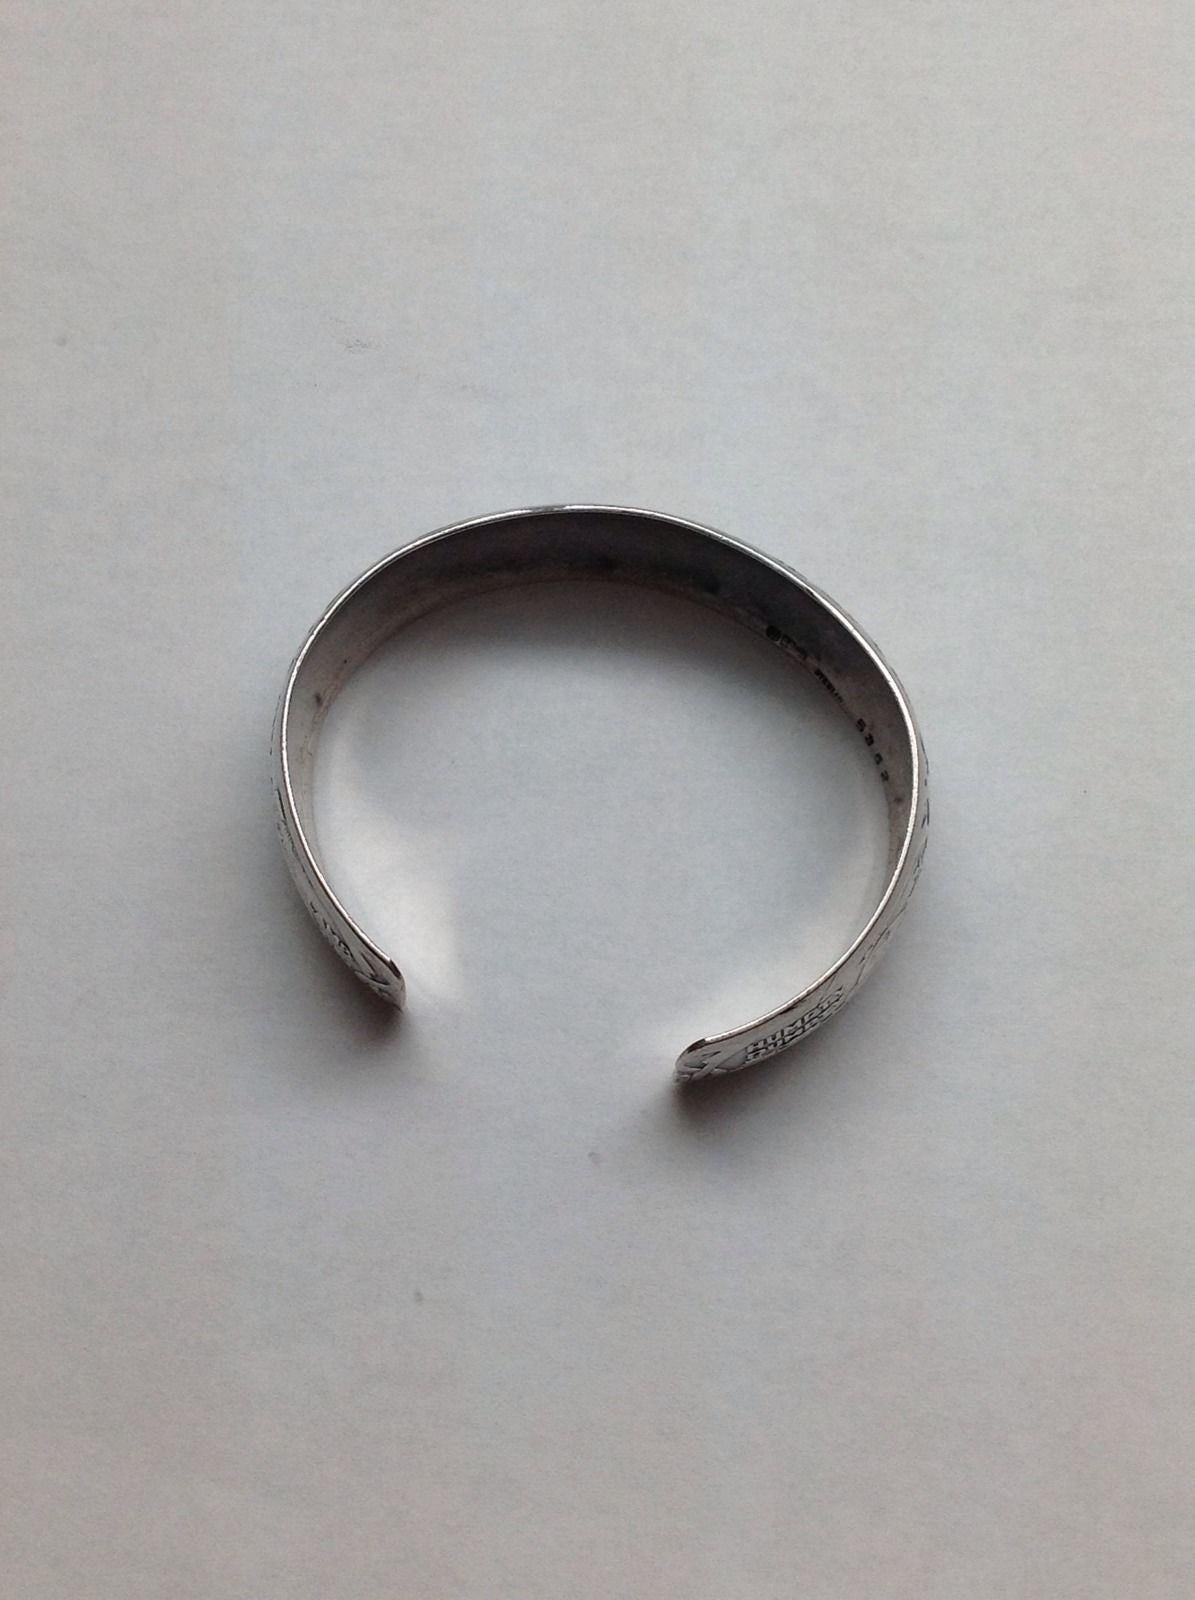 Antique Gorham nursery rhyme napkin ring made into cuff bracelet 5362.

c.1920

Marked: lion anchor G, 5362 sterling.

Measures 5 1/2